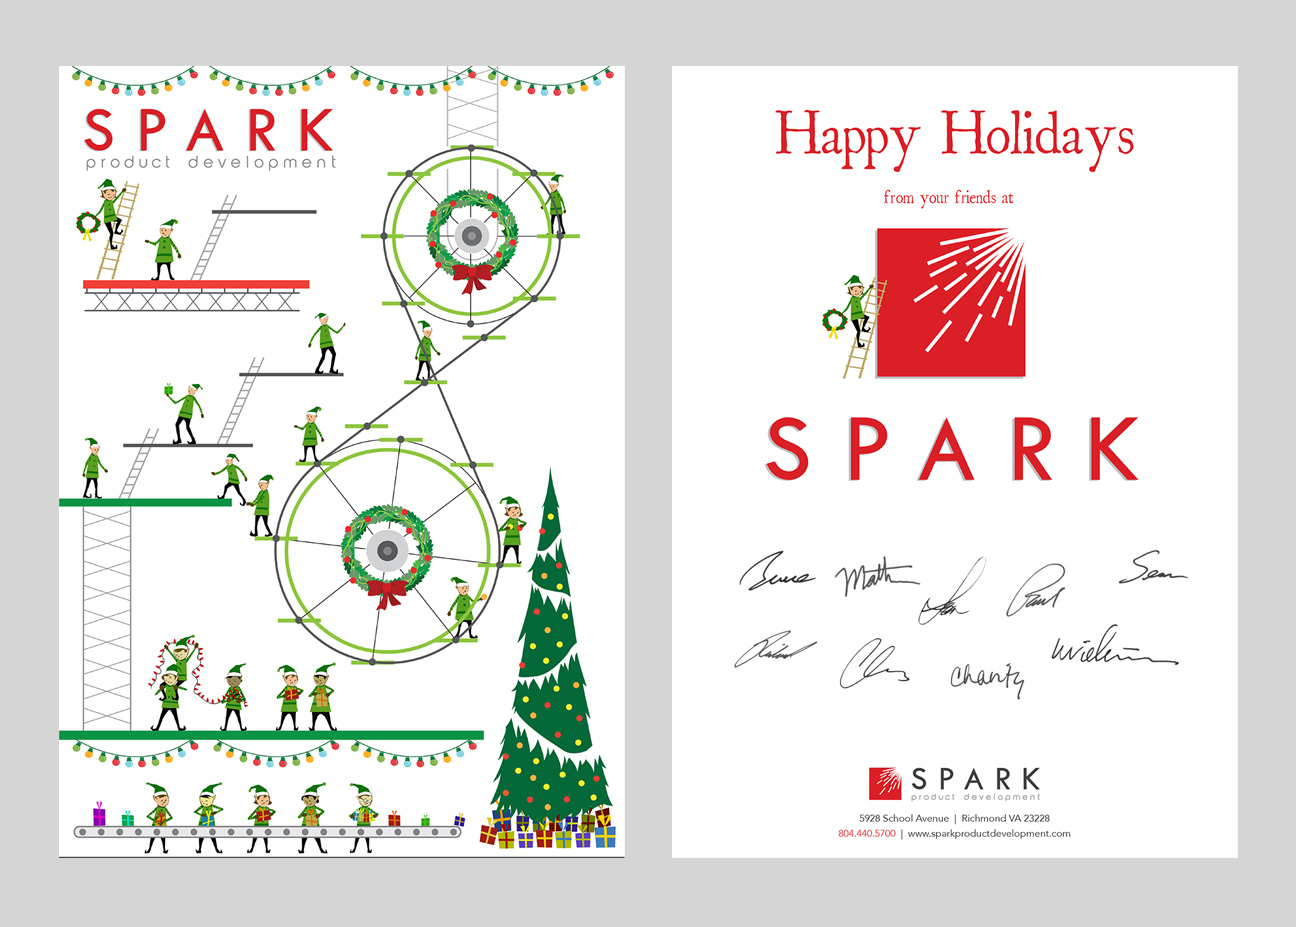 Spark Holiday Cards